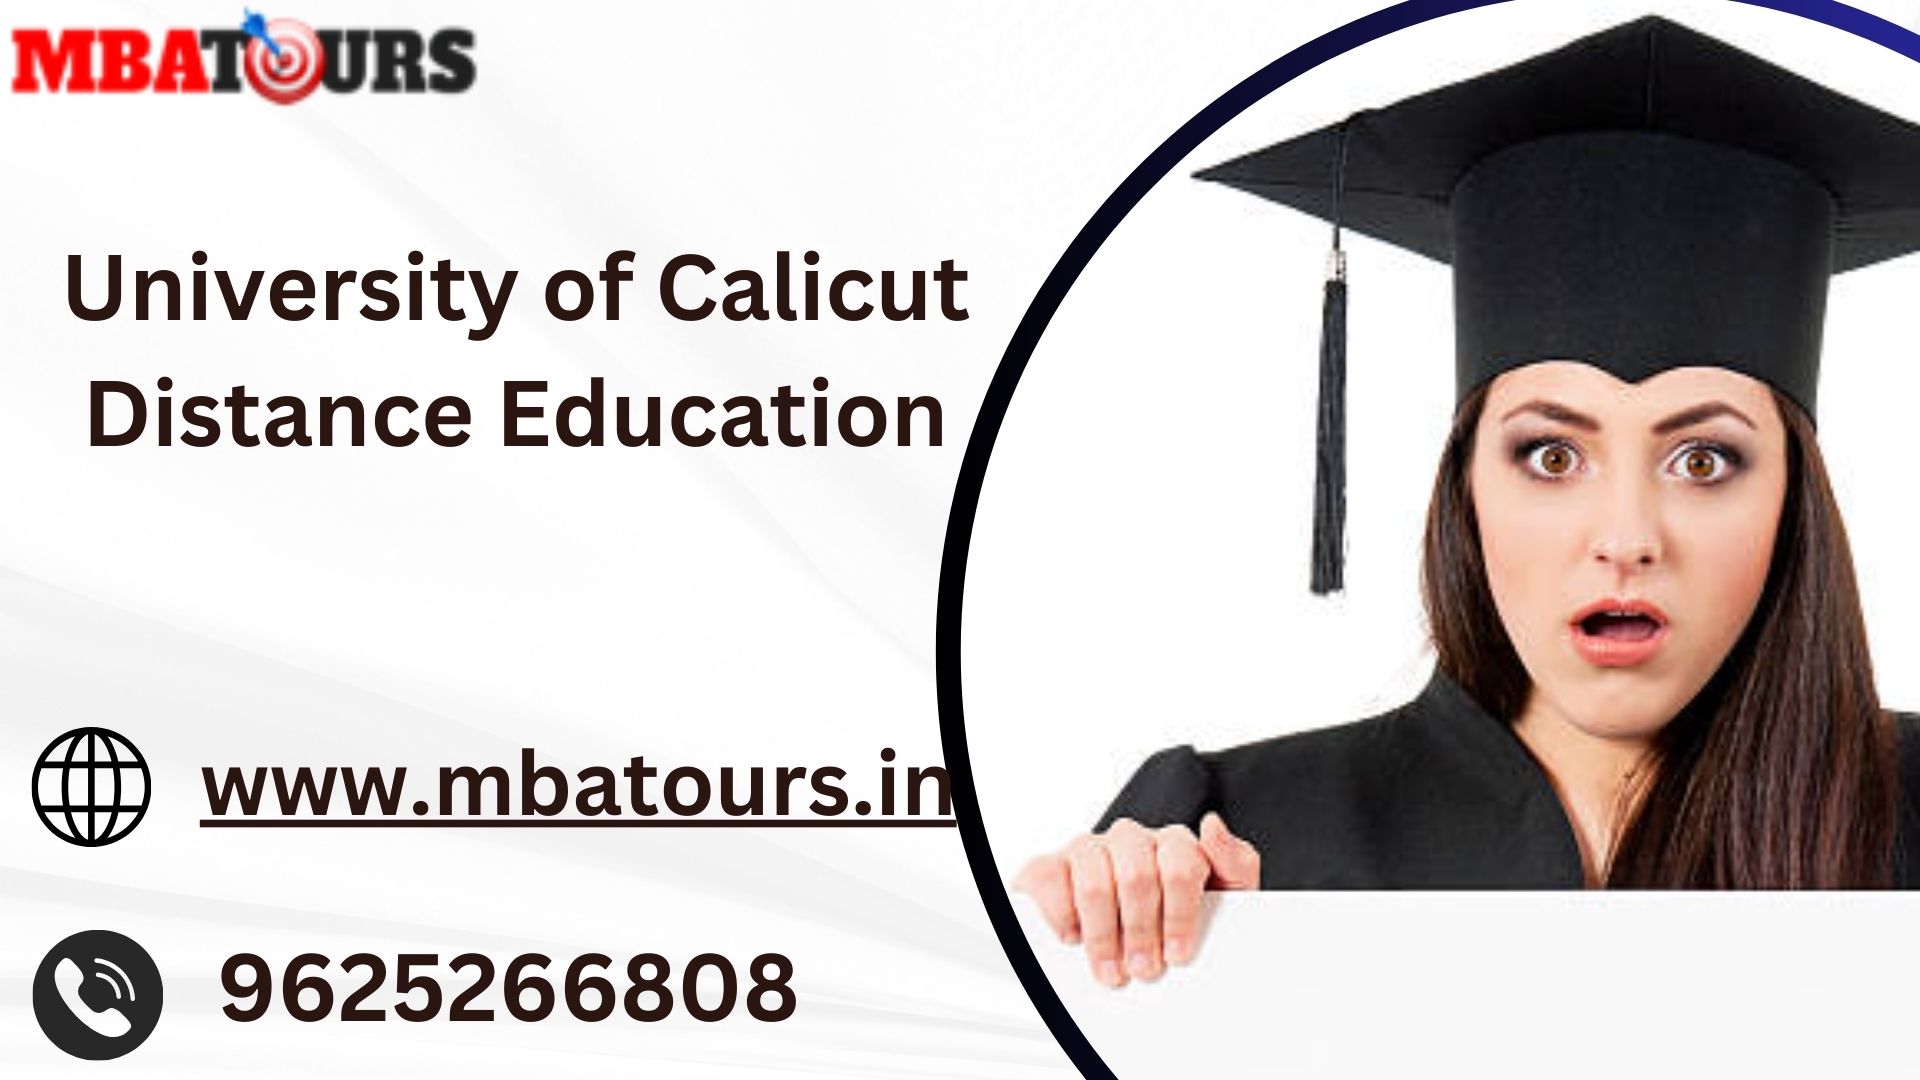 University of Calicut Distance Education